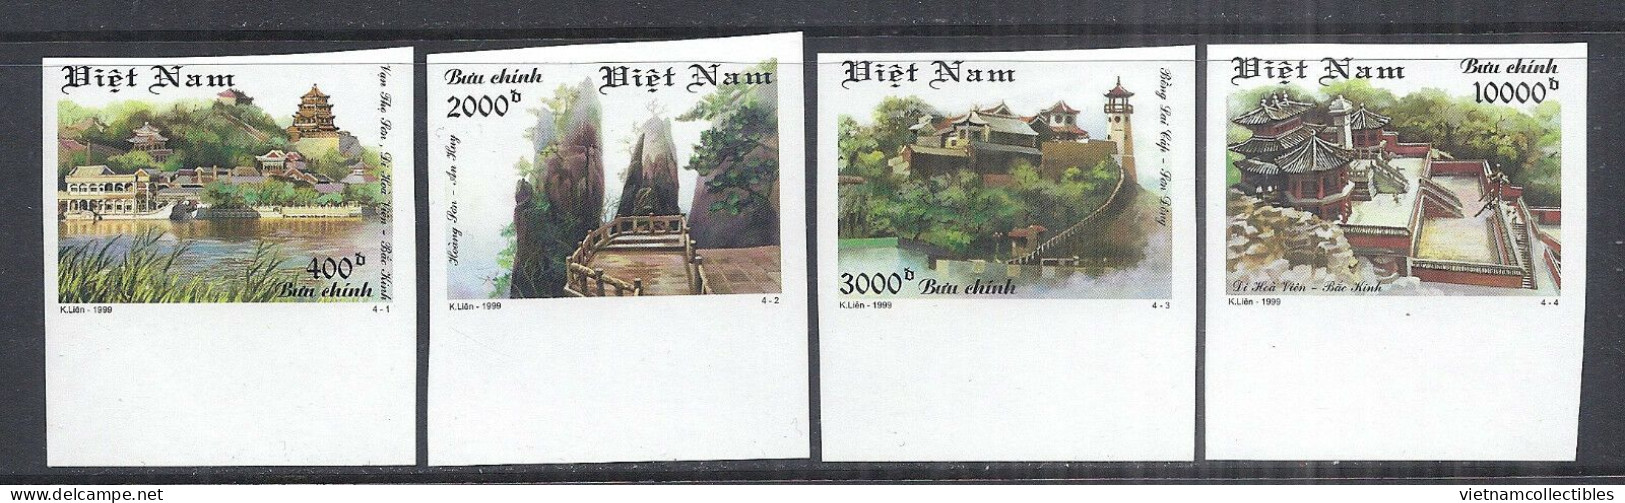 Vietnam Viet Nam MNH Imperf Stamps 1999 : CHina CHinese Landscape (Ms811) - Vietnam